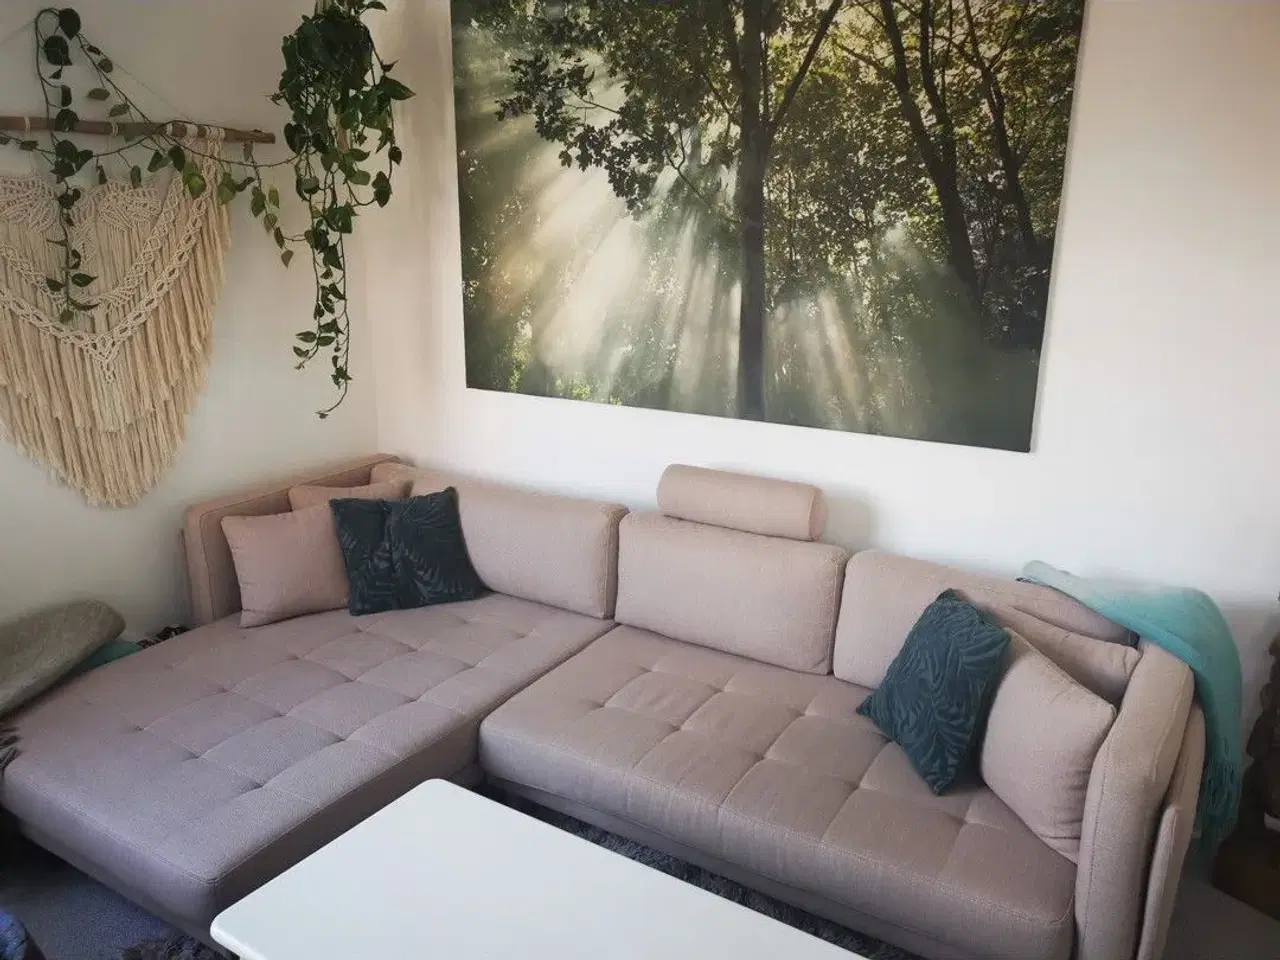 Billede 3 - Chaiselong sofa perfekt til de små kbh lejl 